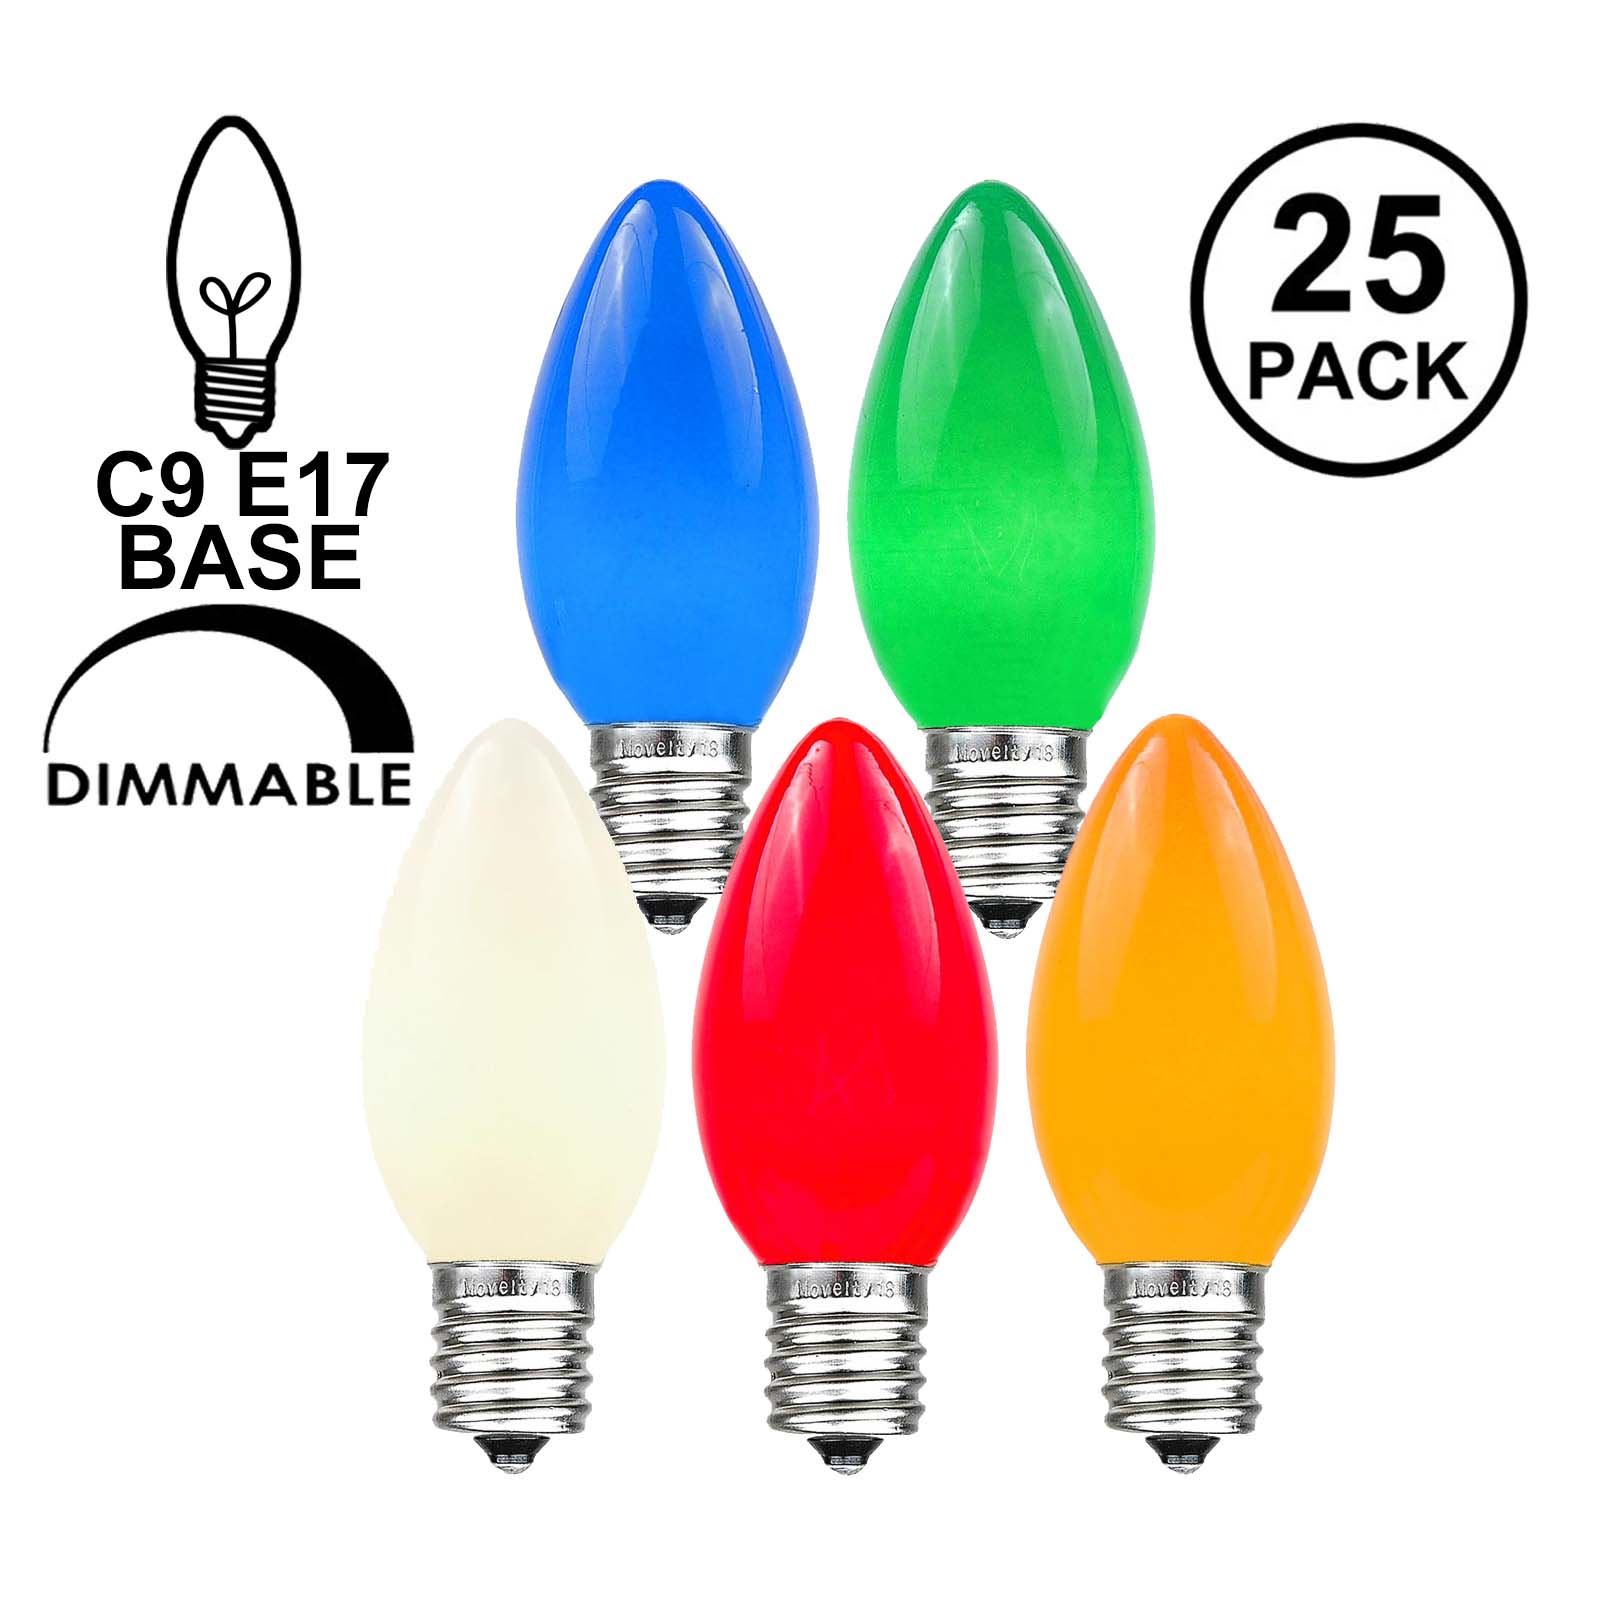 7 Watt Green E17/C9 Base Novelty Lights 25 Pack C9 Ceramic Outdoor String Light Christmas Replacement Bulbs 